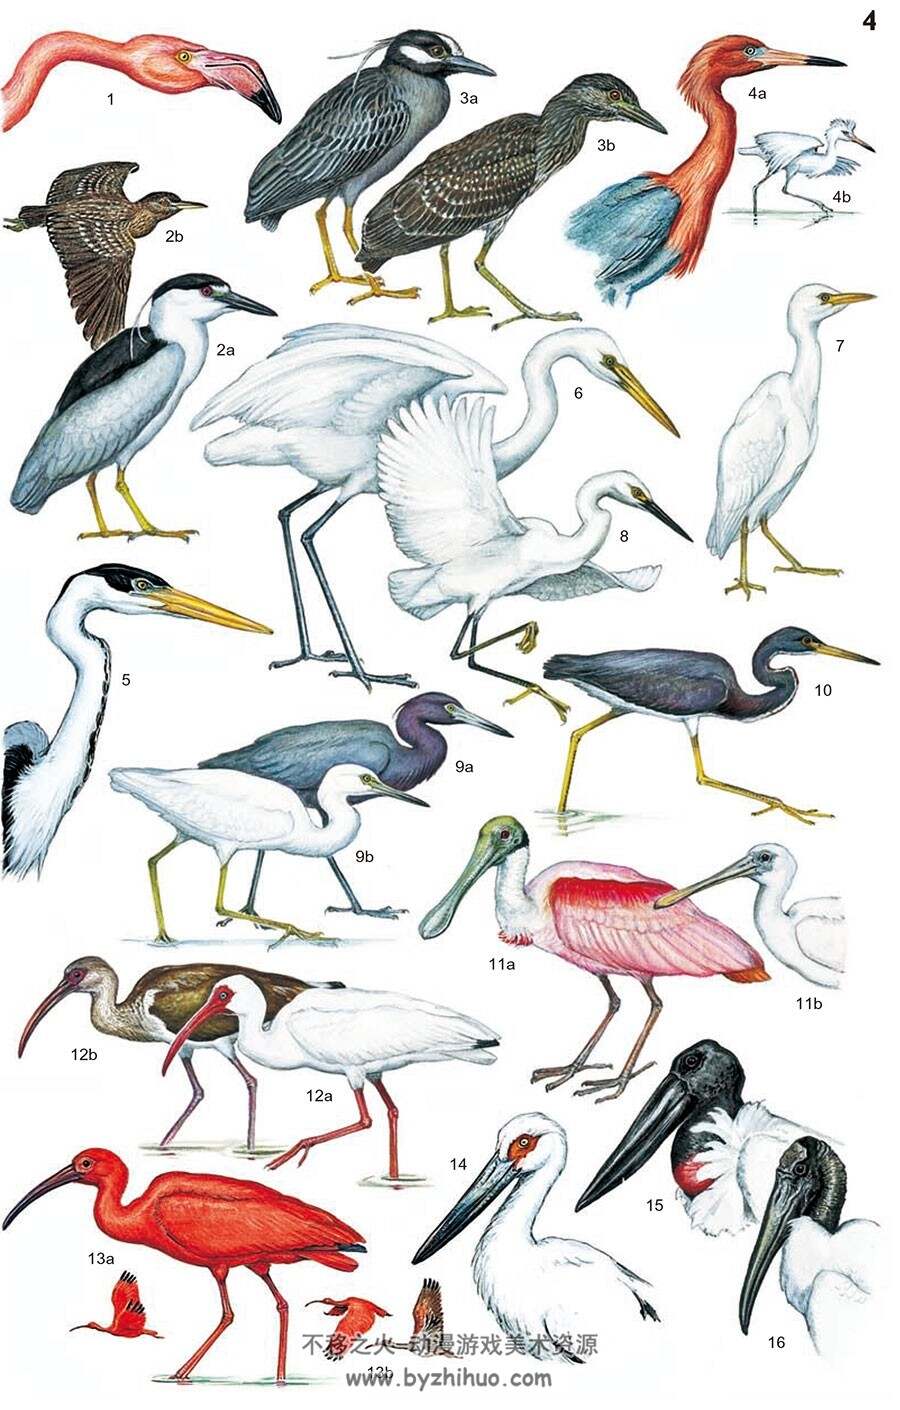 Birds of Venezuela 委内瑞丽的鸟 禽类动物图文科普资料参考书 PDF下载